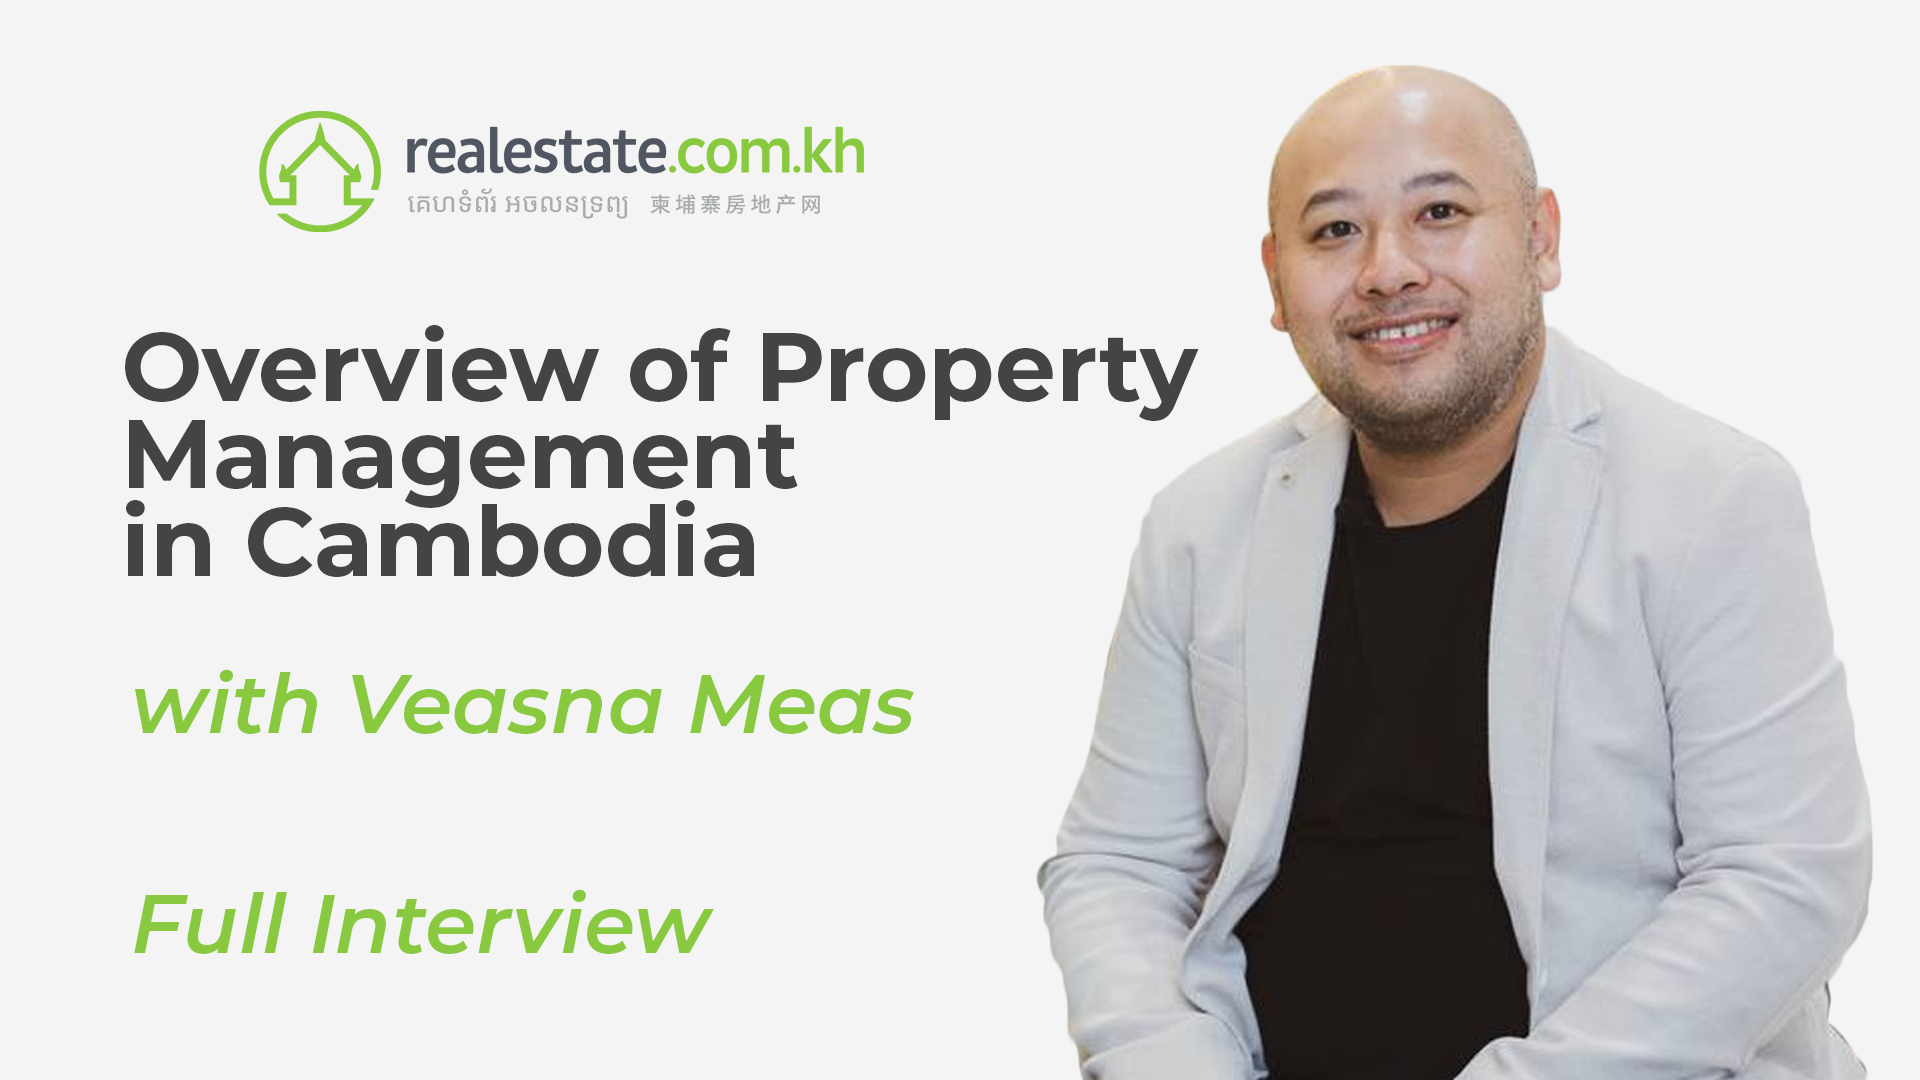 Managing properties in Cambodia as an overseas investor